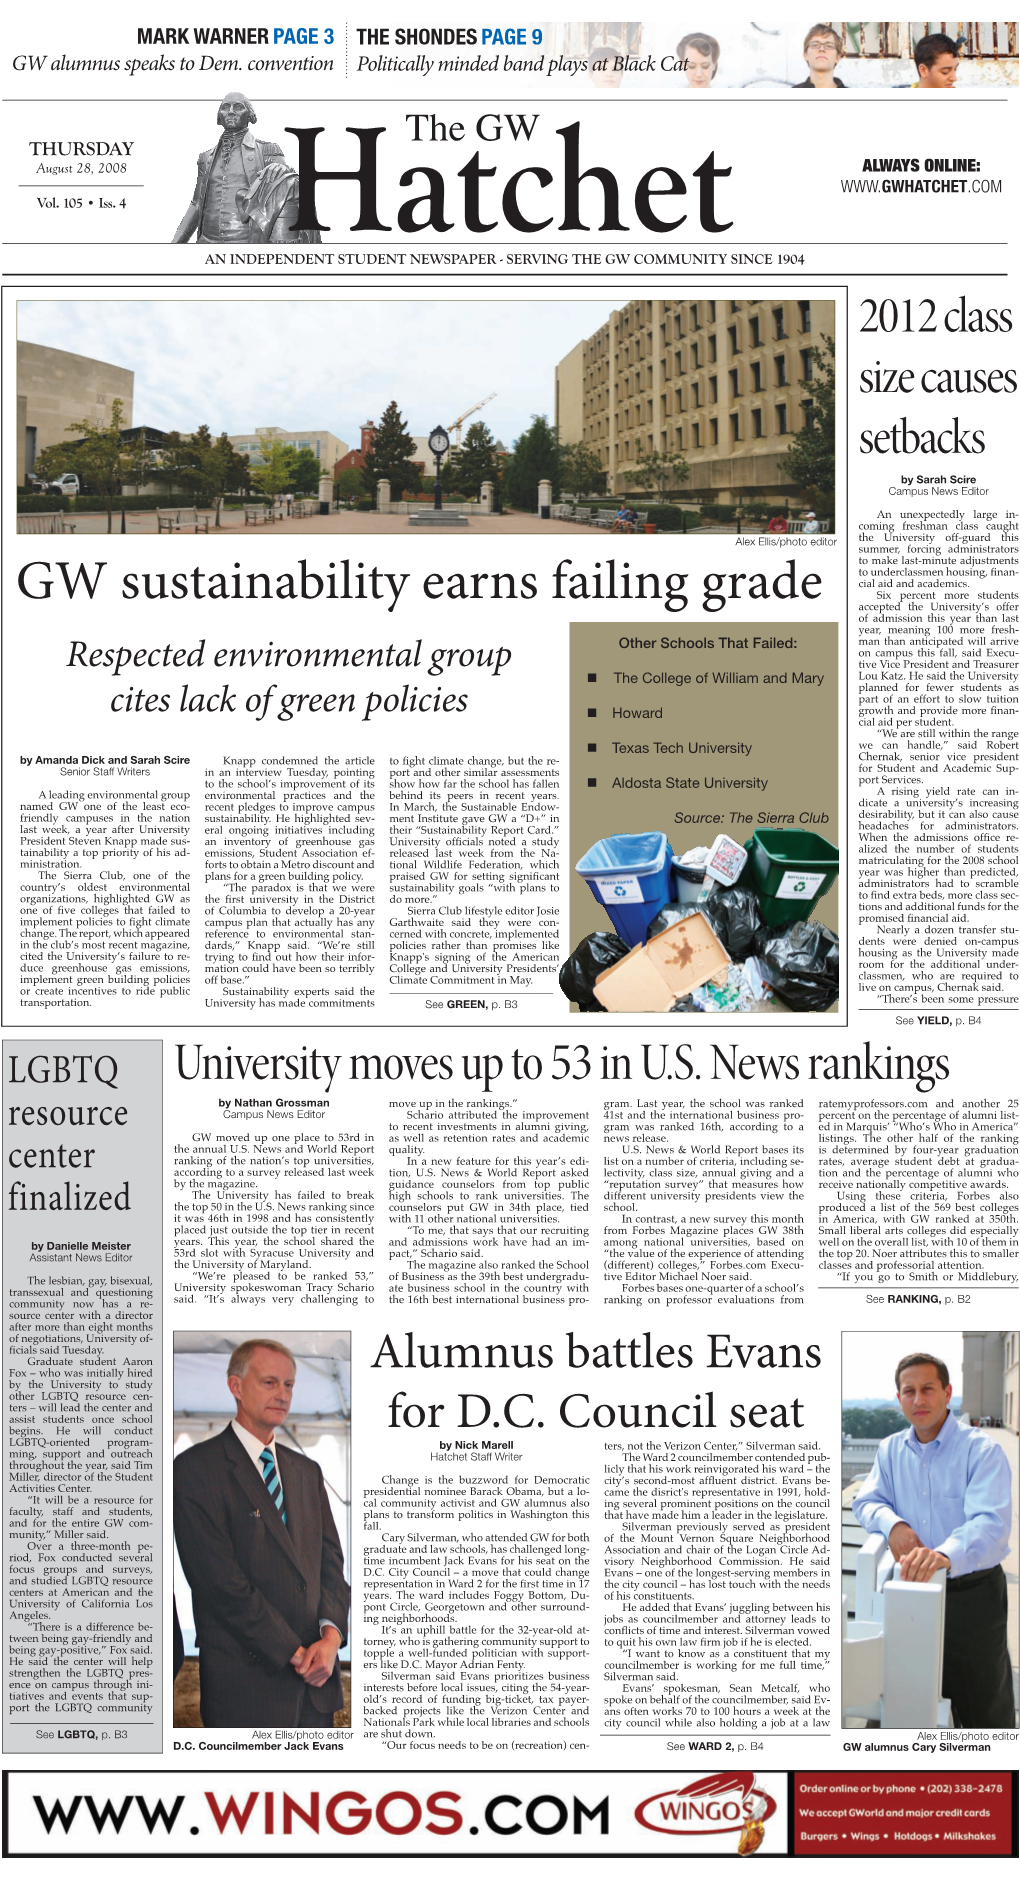 GW Sustainability Earns Failing Grade